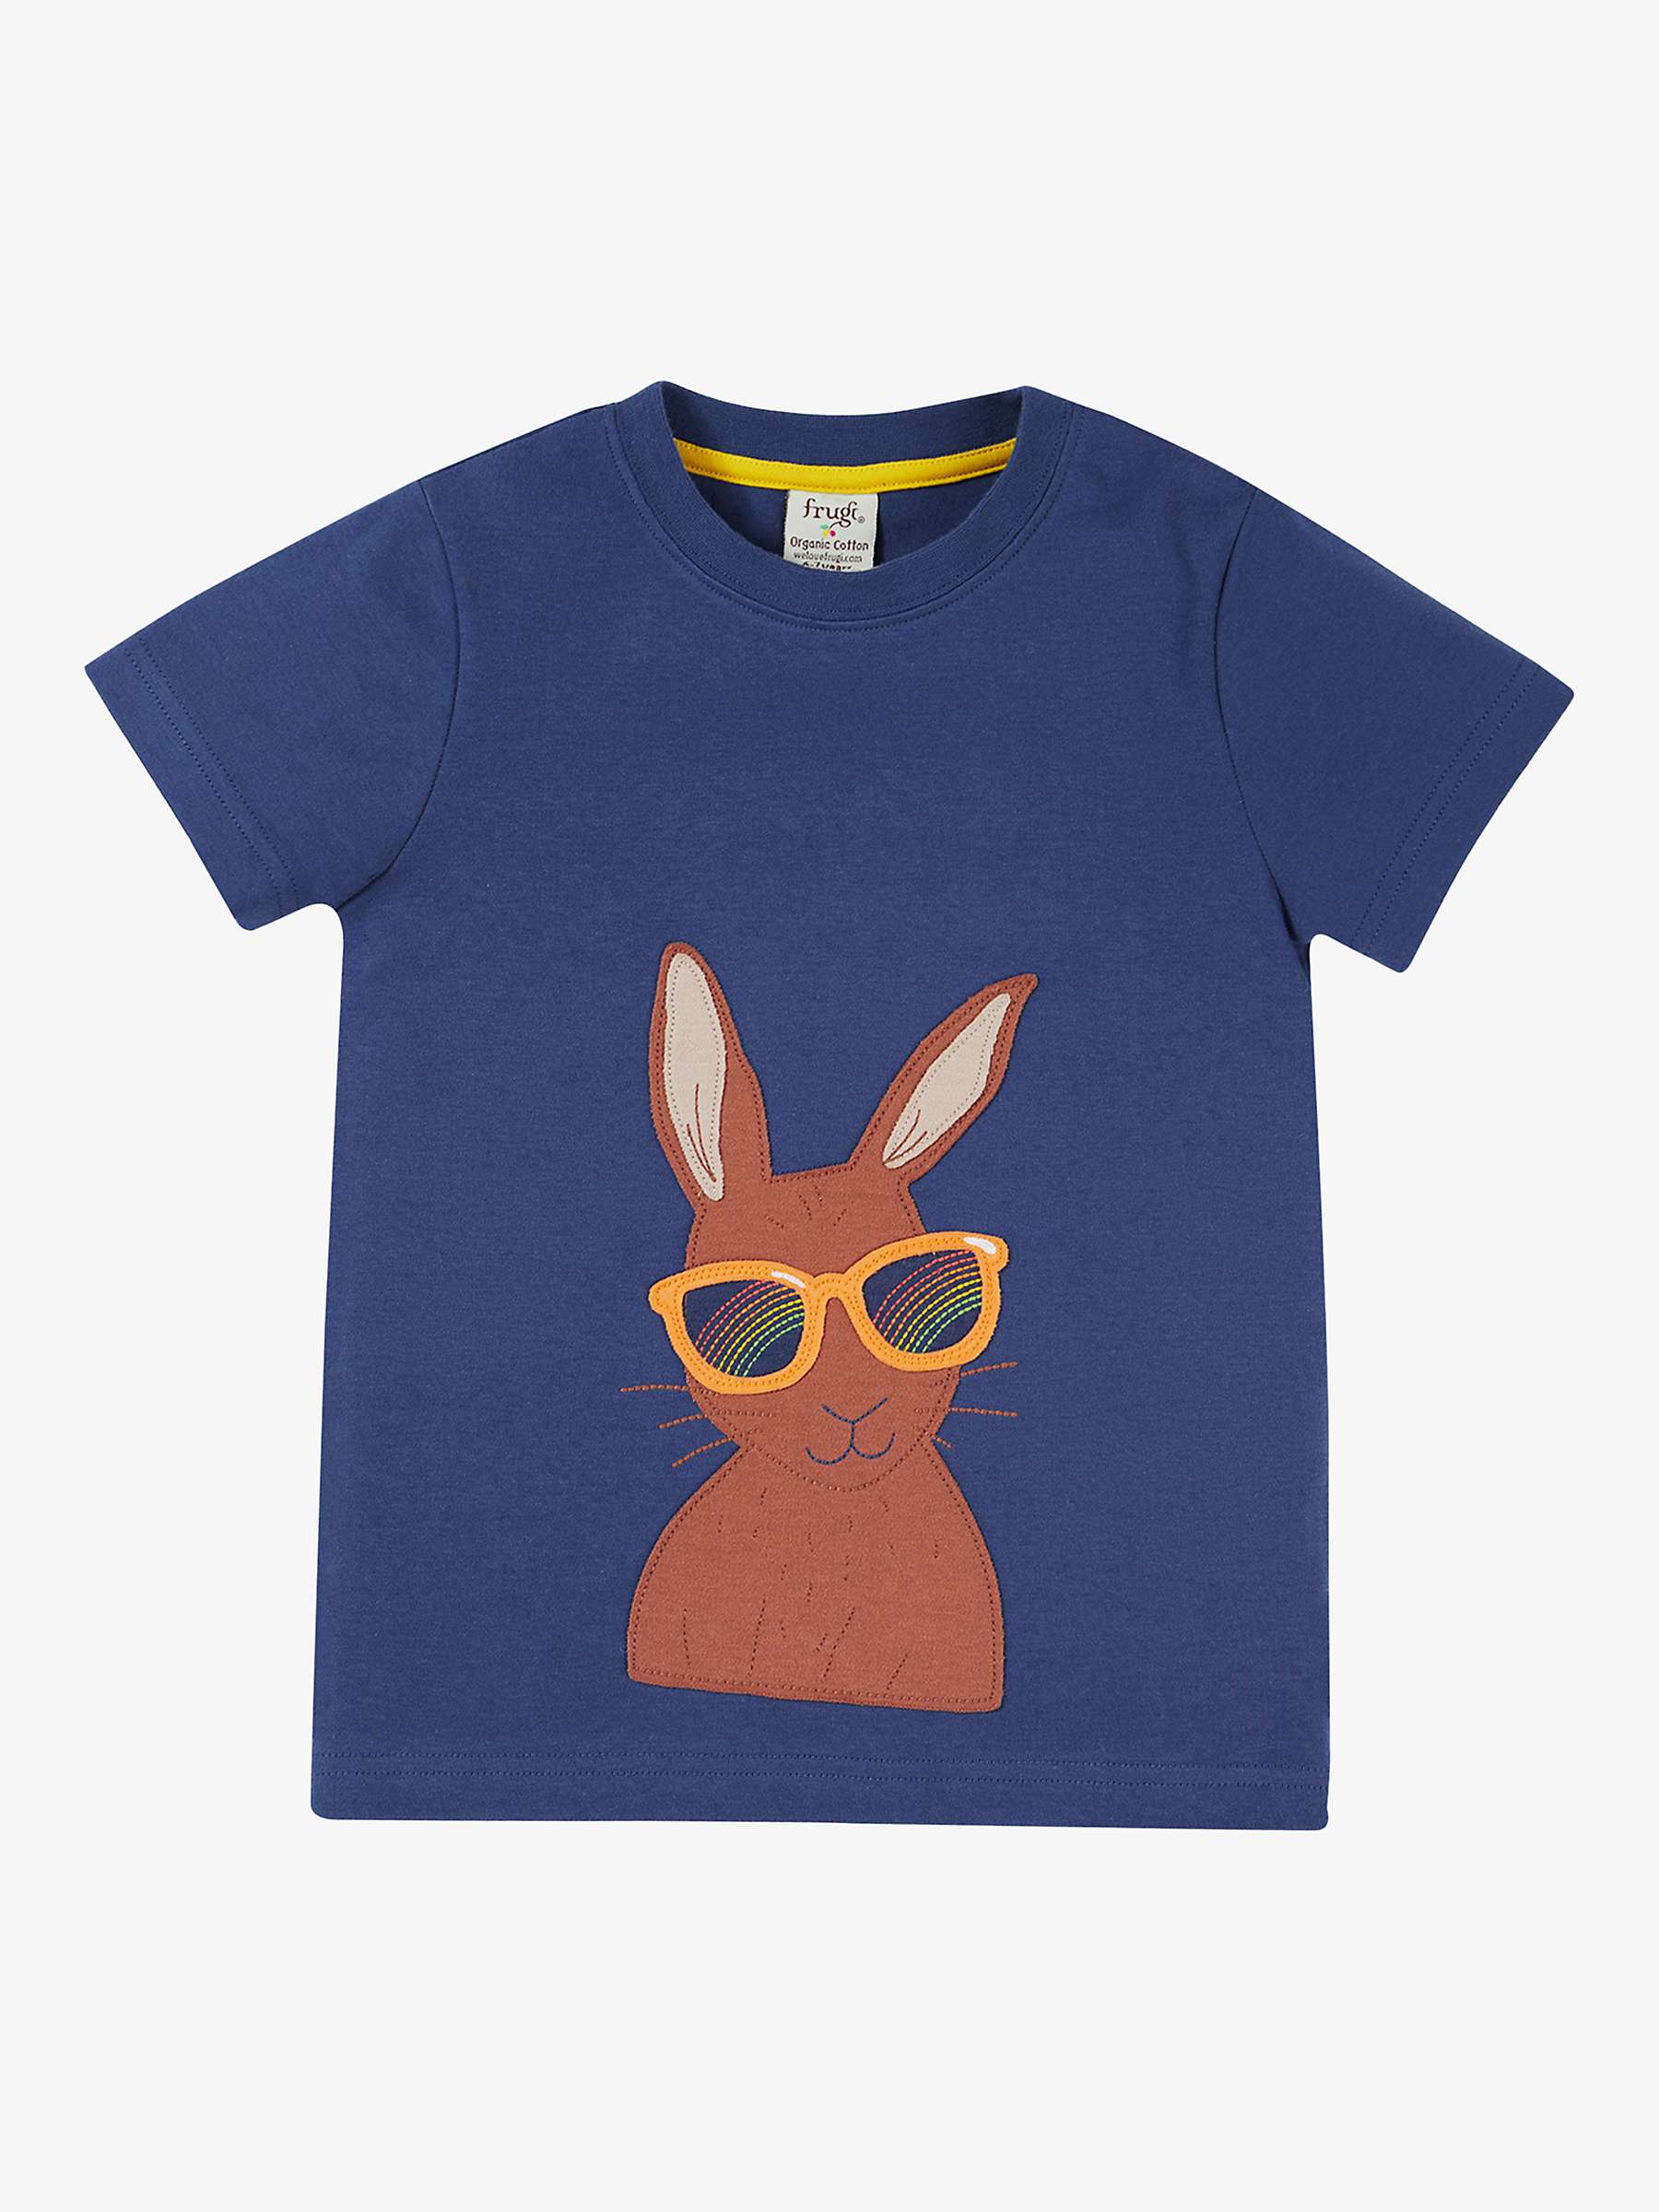 Buy Frugi Kids' Carsen Organic Cotton Hare Applique T-Shirt, Navy Blue Online at johnlewis.com